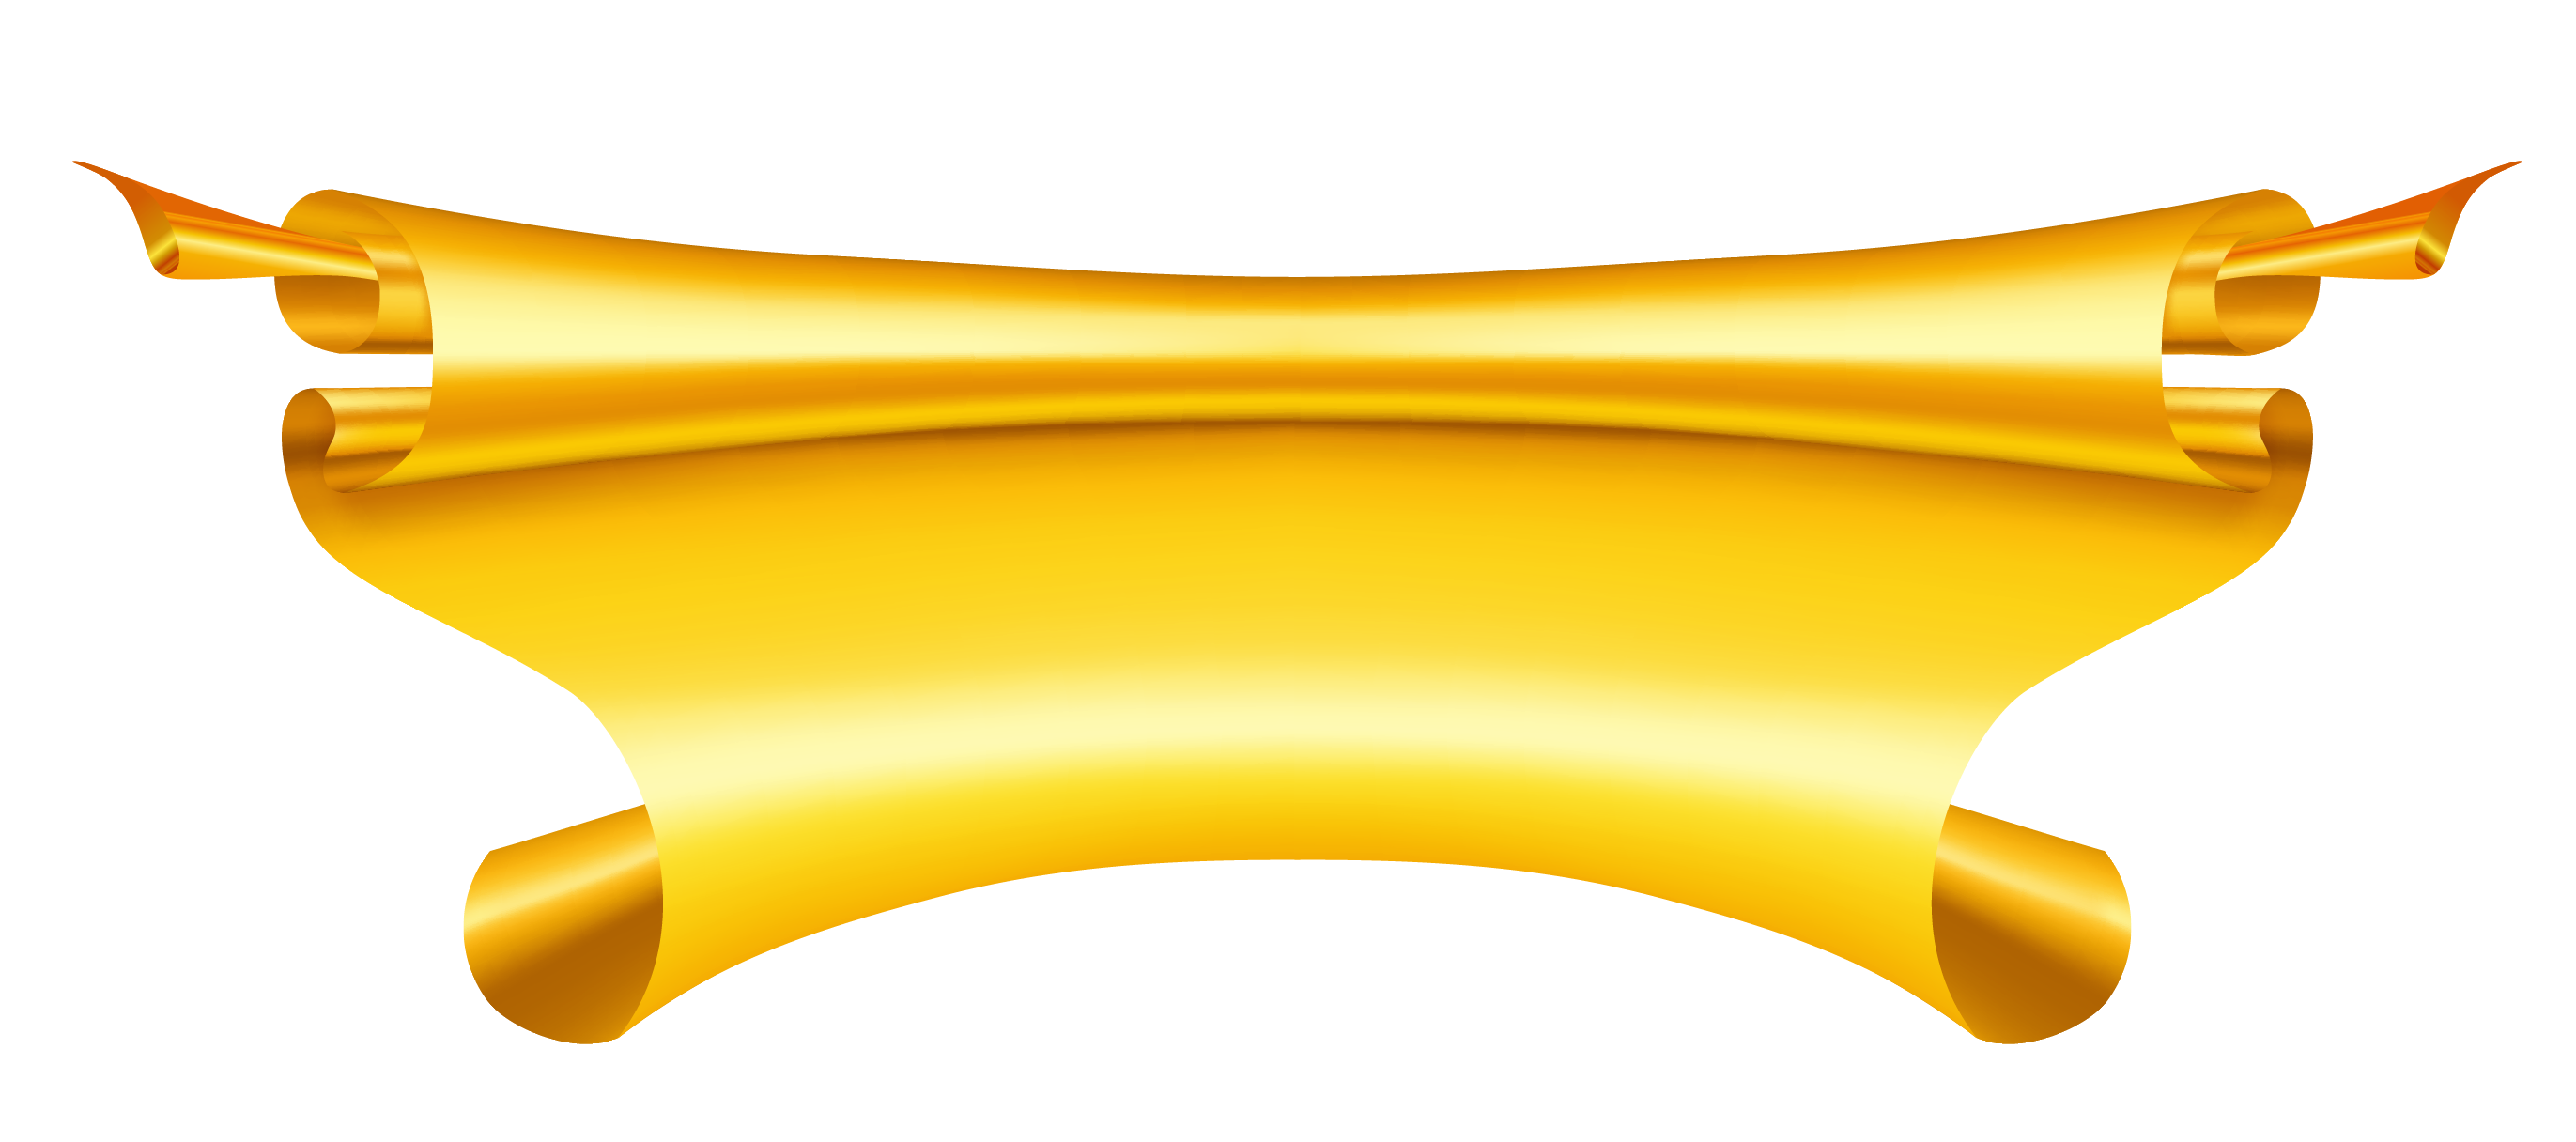 Gold Ribbon PNG High-Quality Image